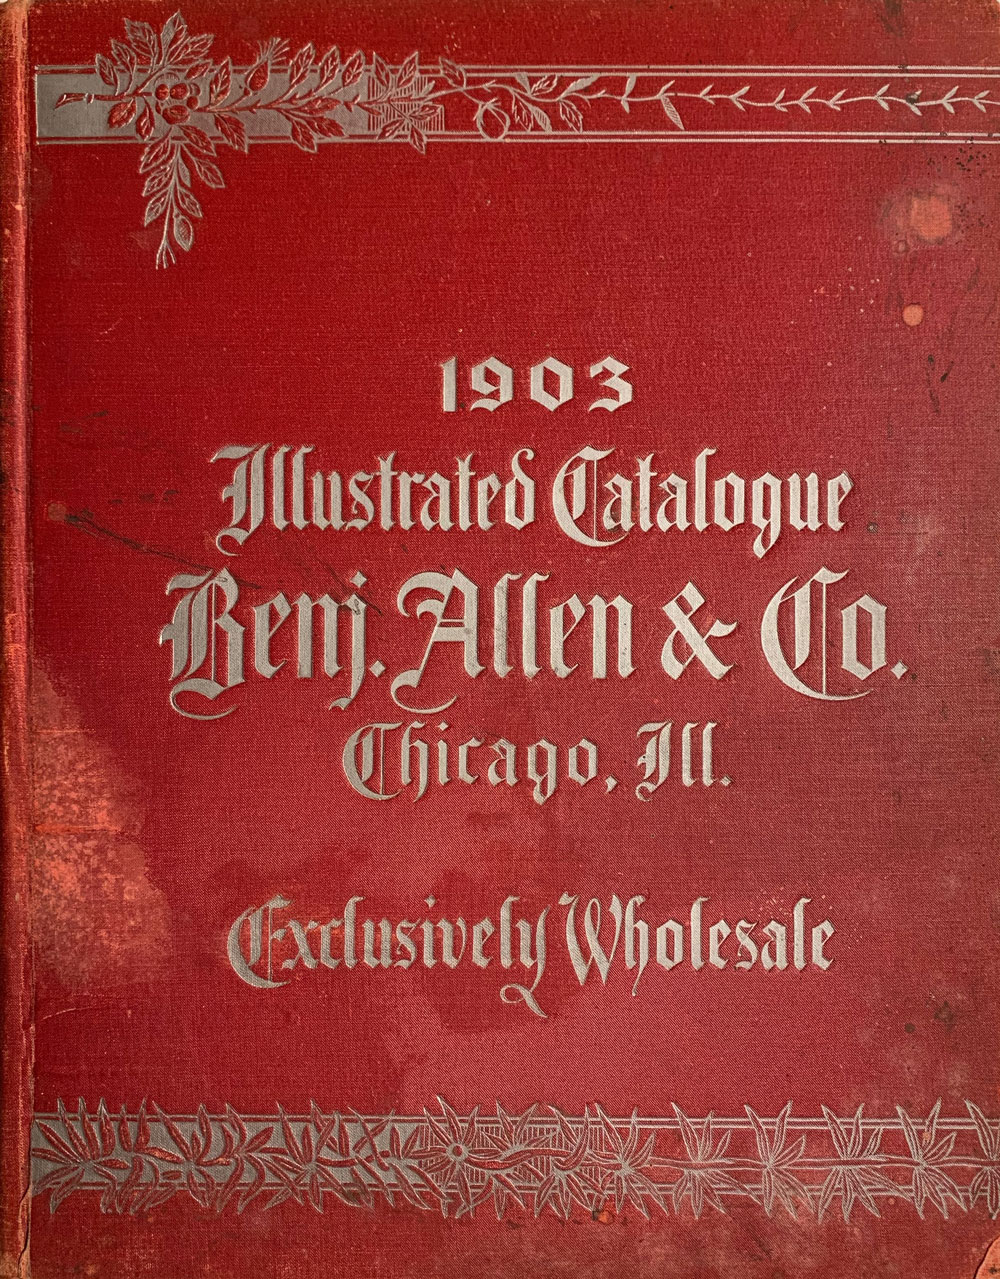 Benj. Allen & Co. Illustrated Catalog (1903) Cover Image